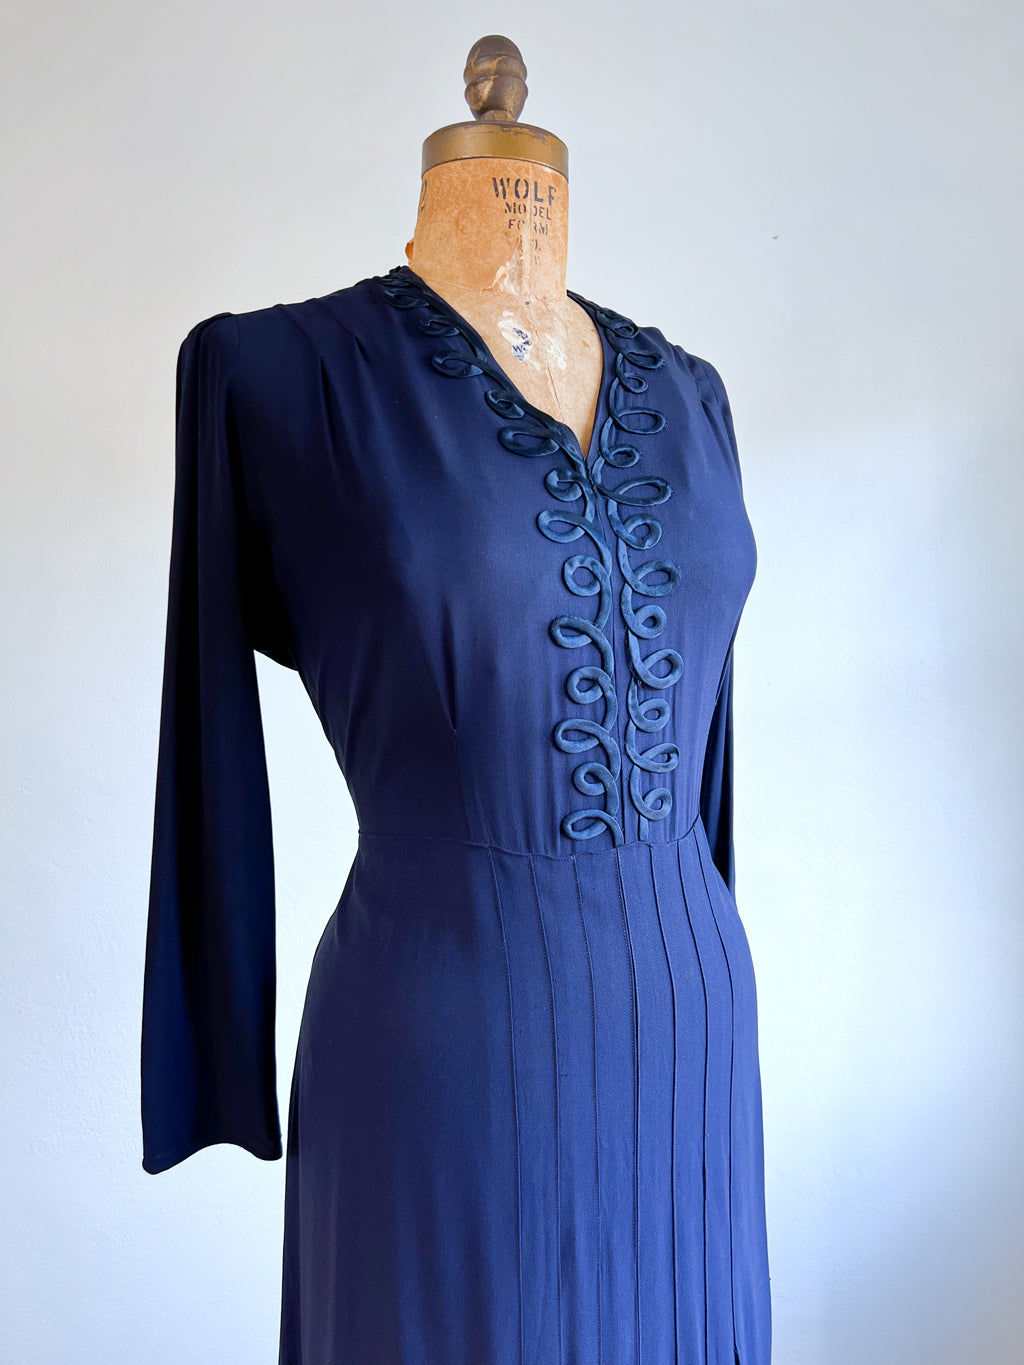 Vintage 1930s Dress - VOLUP Navy Blue Matte Rayon w Satin Soutache Loop-de-Loops Size XL to XXL